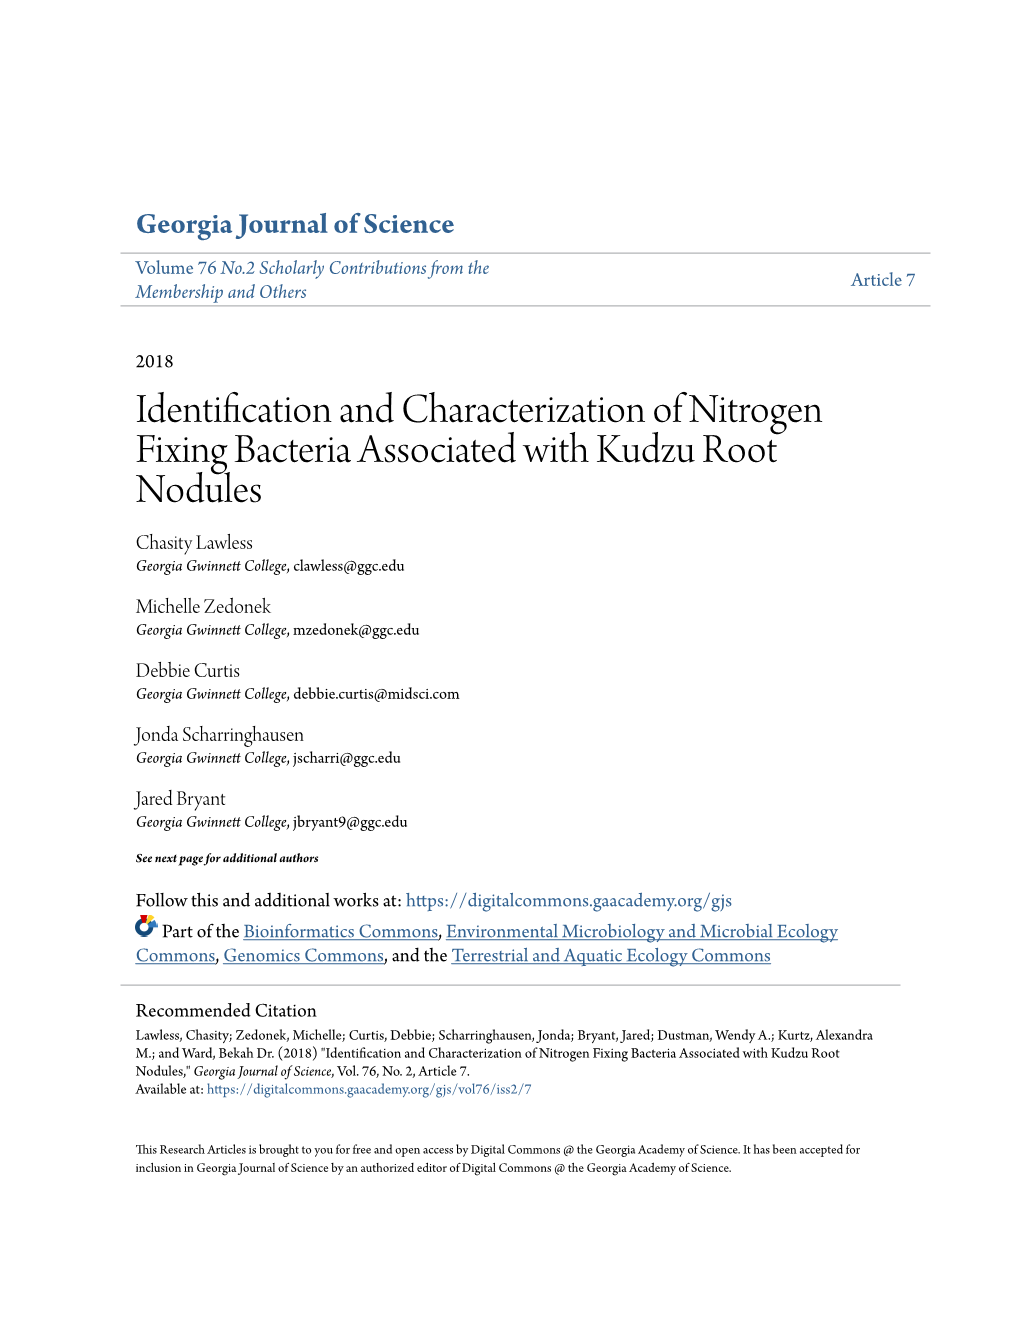 Identification and Characterization of Nitrogen Fixing Bacteria Associated with Kudzu Root Nodules Chasity Lawless Georgia Gwinnett College, Clawless@Ggc.Edu